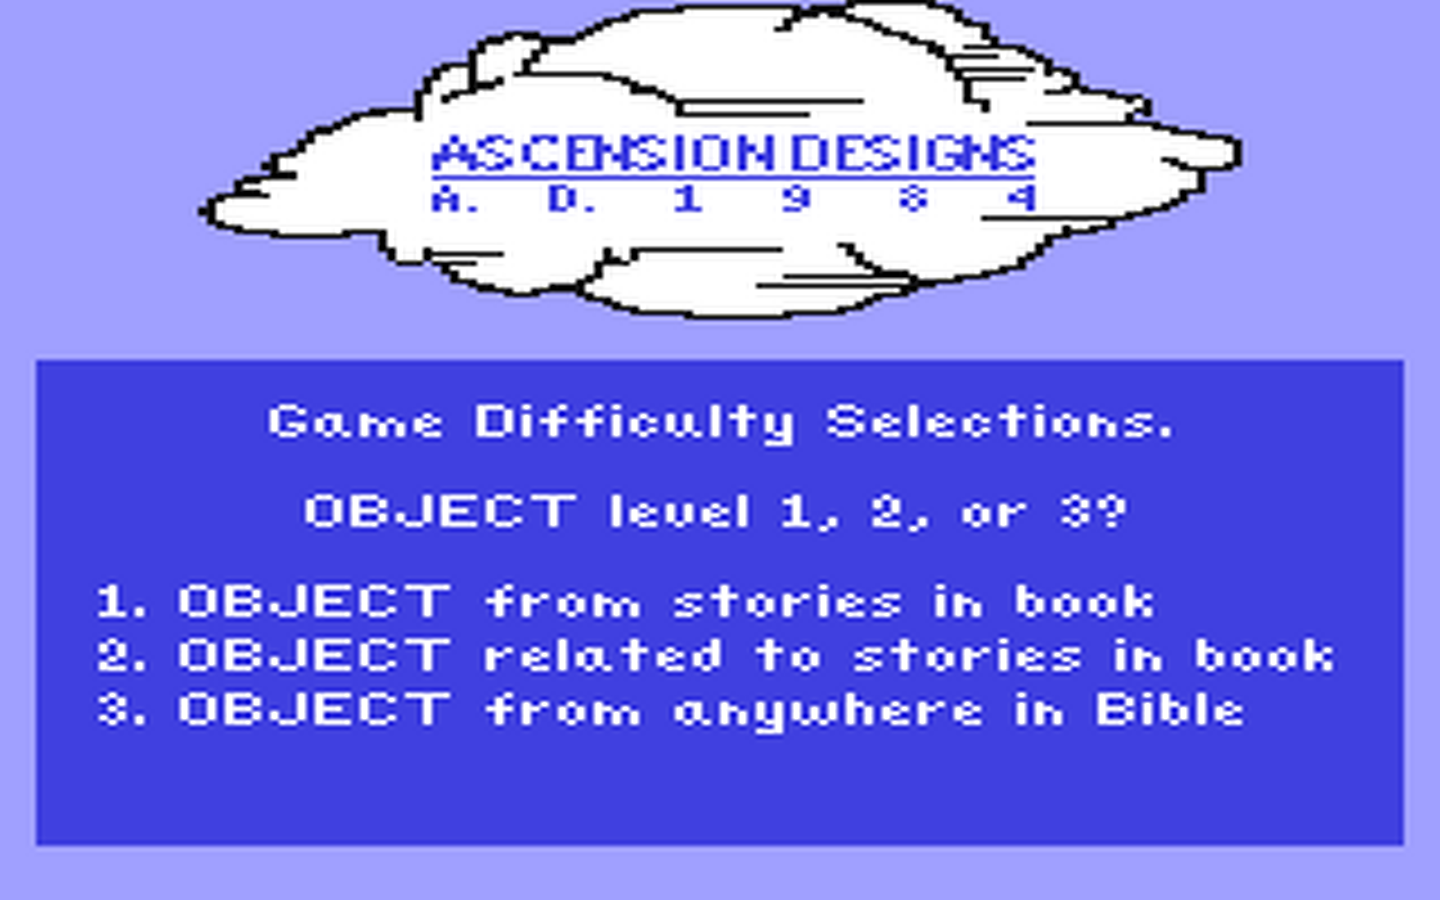 C64 GameBase Right_Again Ascension_Designs 1984